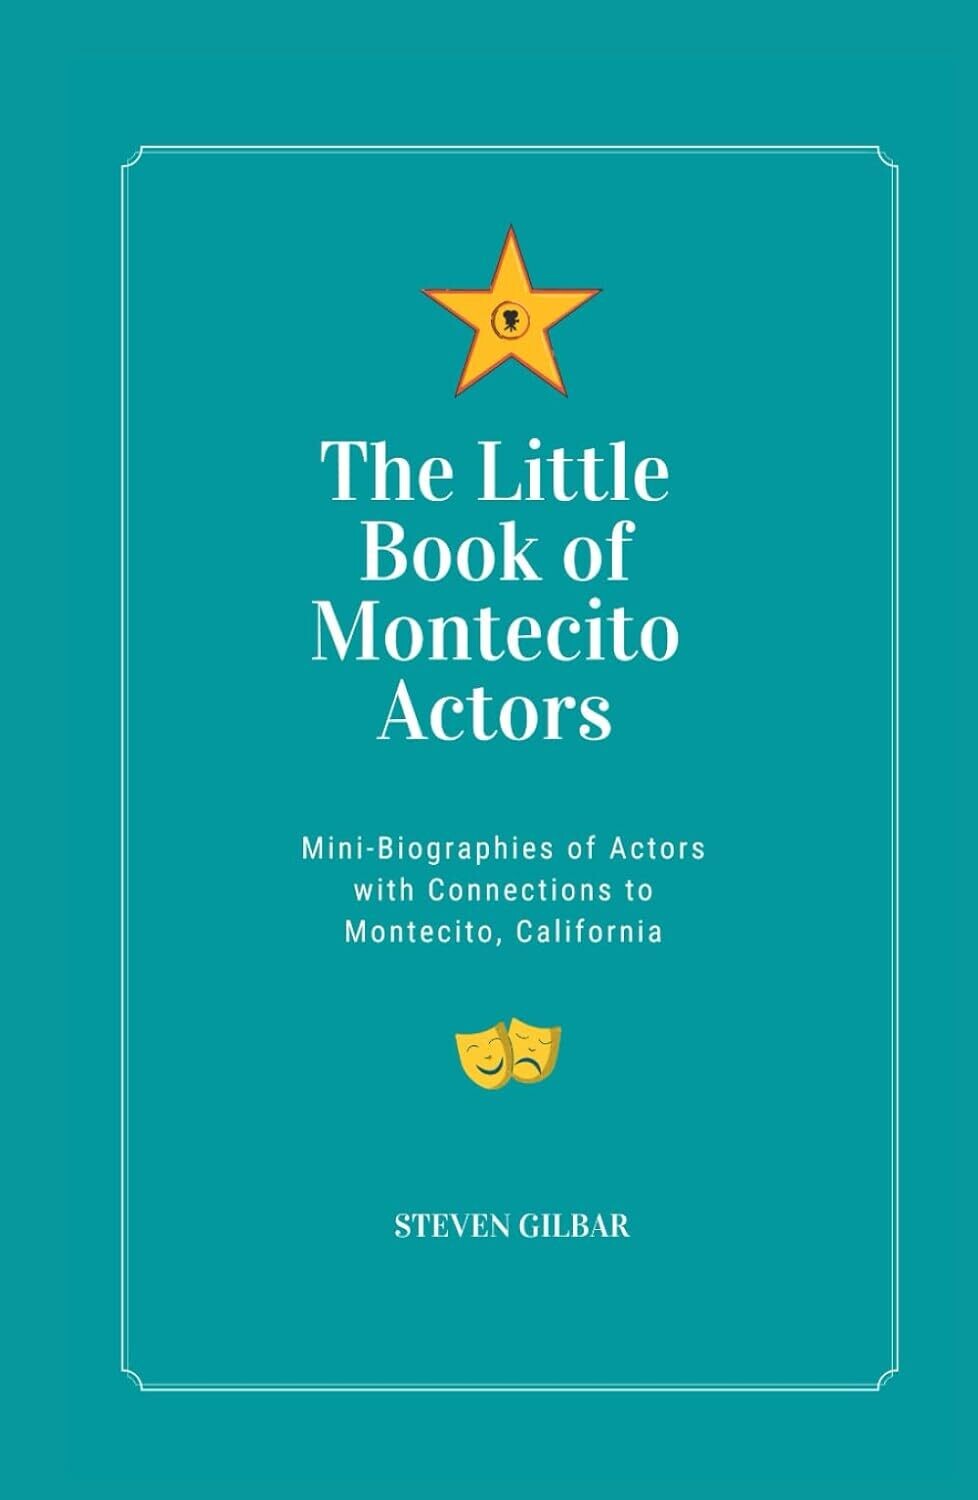 The Little Book of Montecito Actors